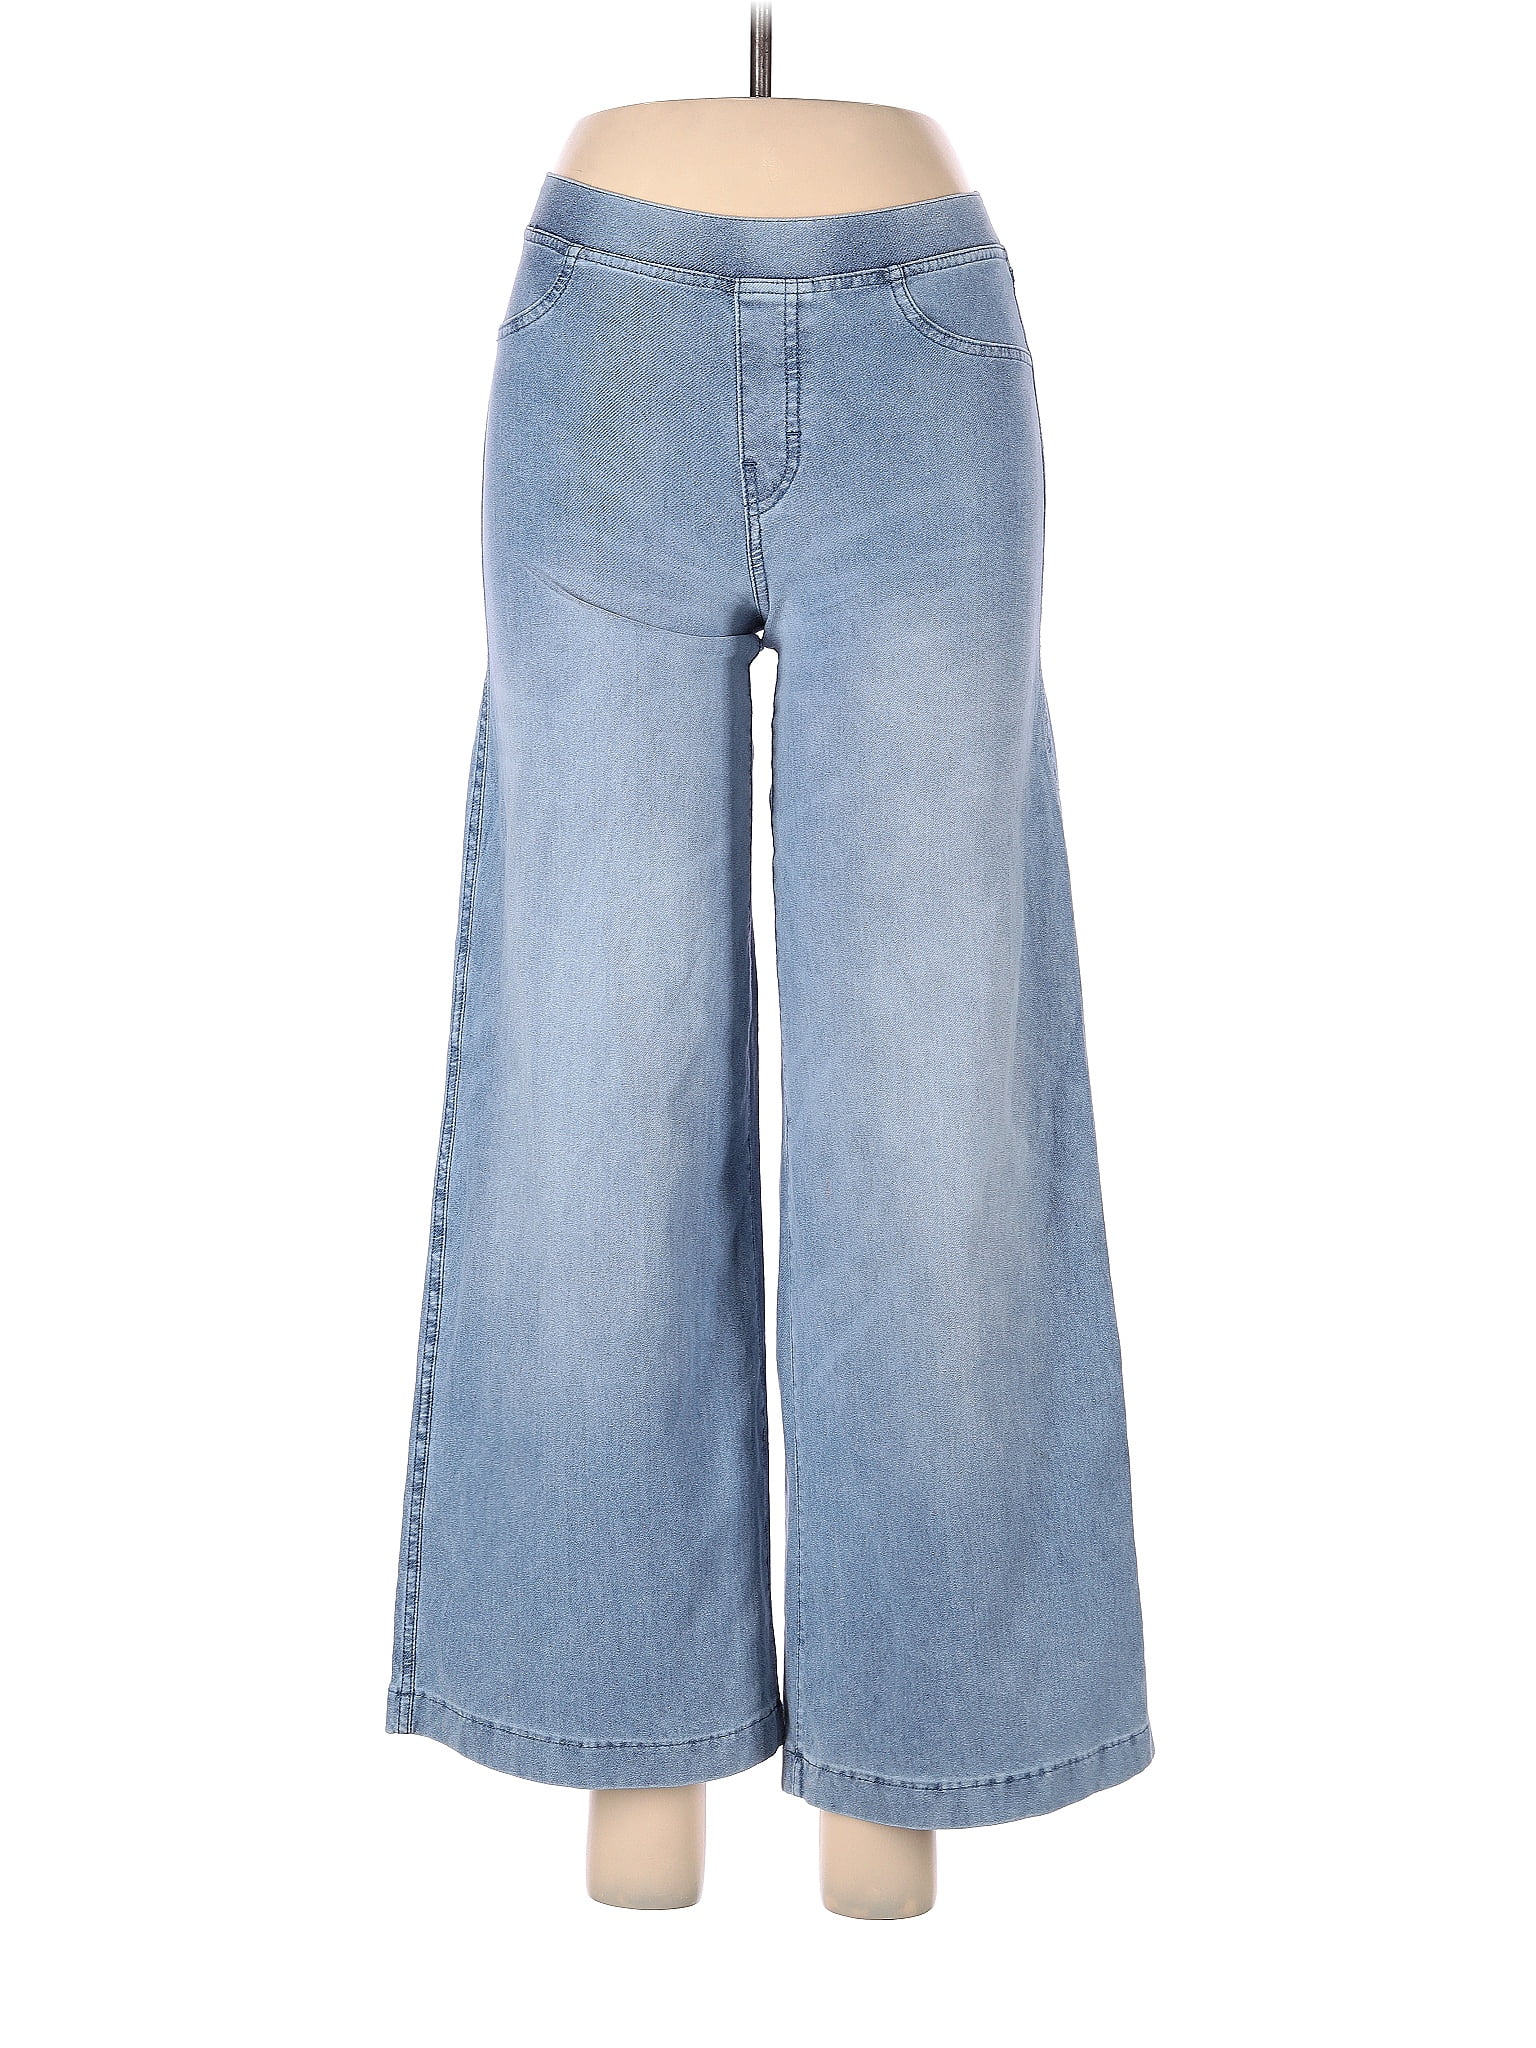 H&M Solid Blue Jeans Size 14 - 39% off | thredUP